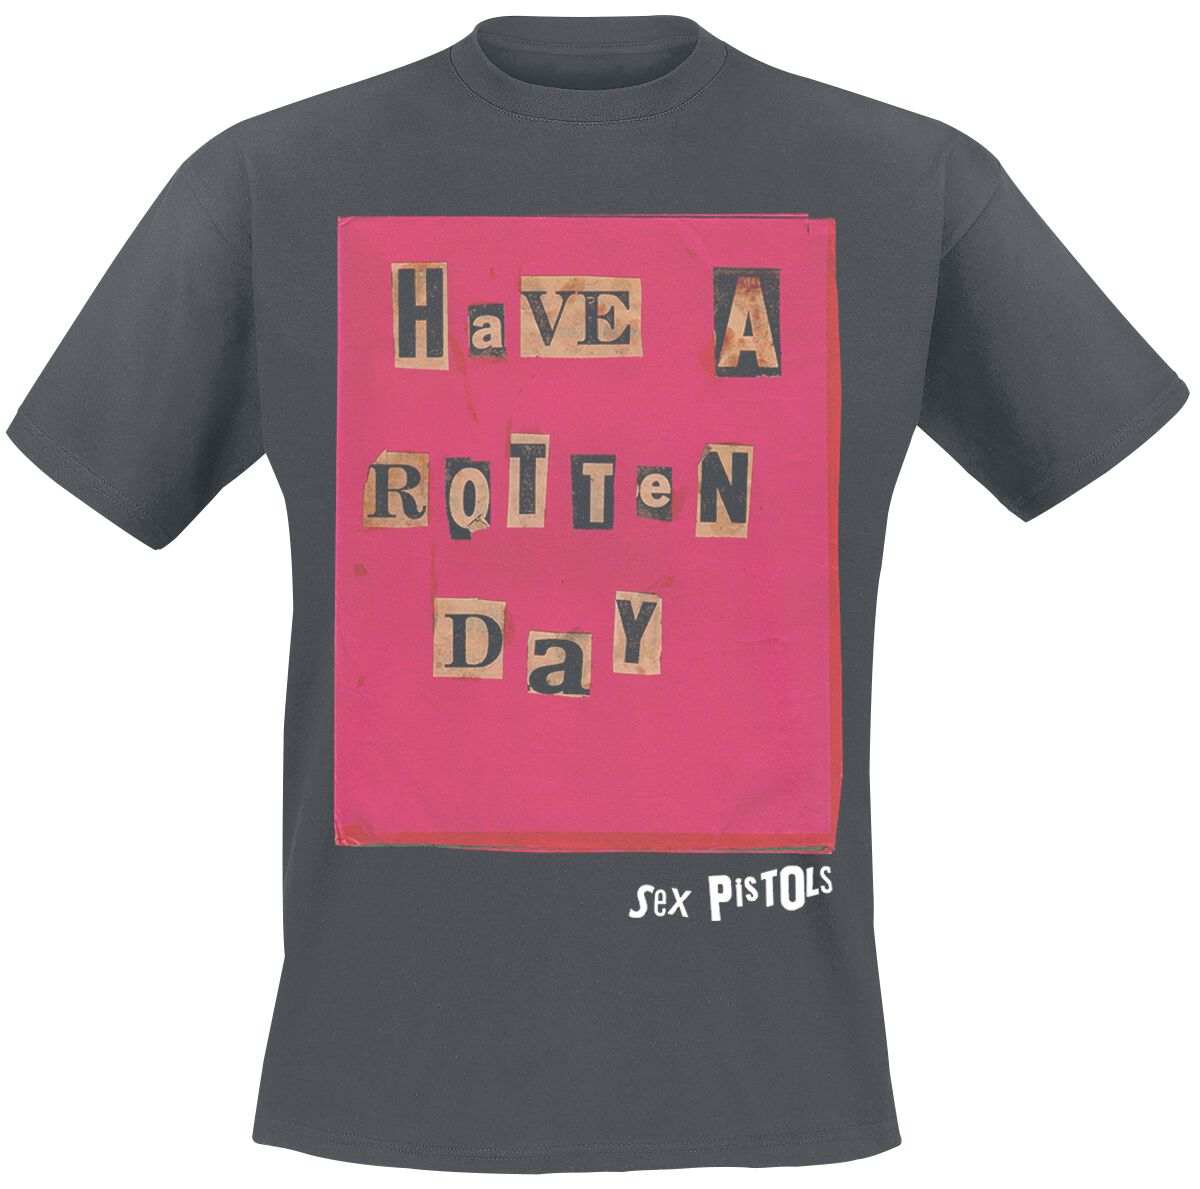 Sex Pistols Rotten Day T-Shirt charcoal